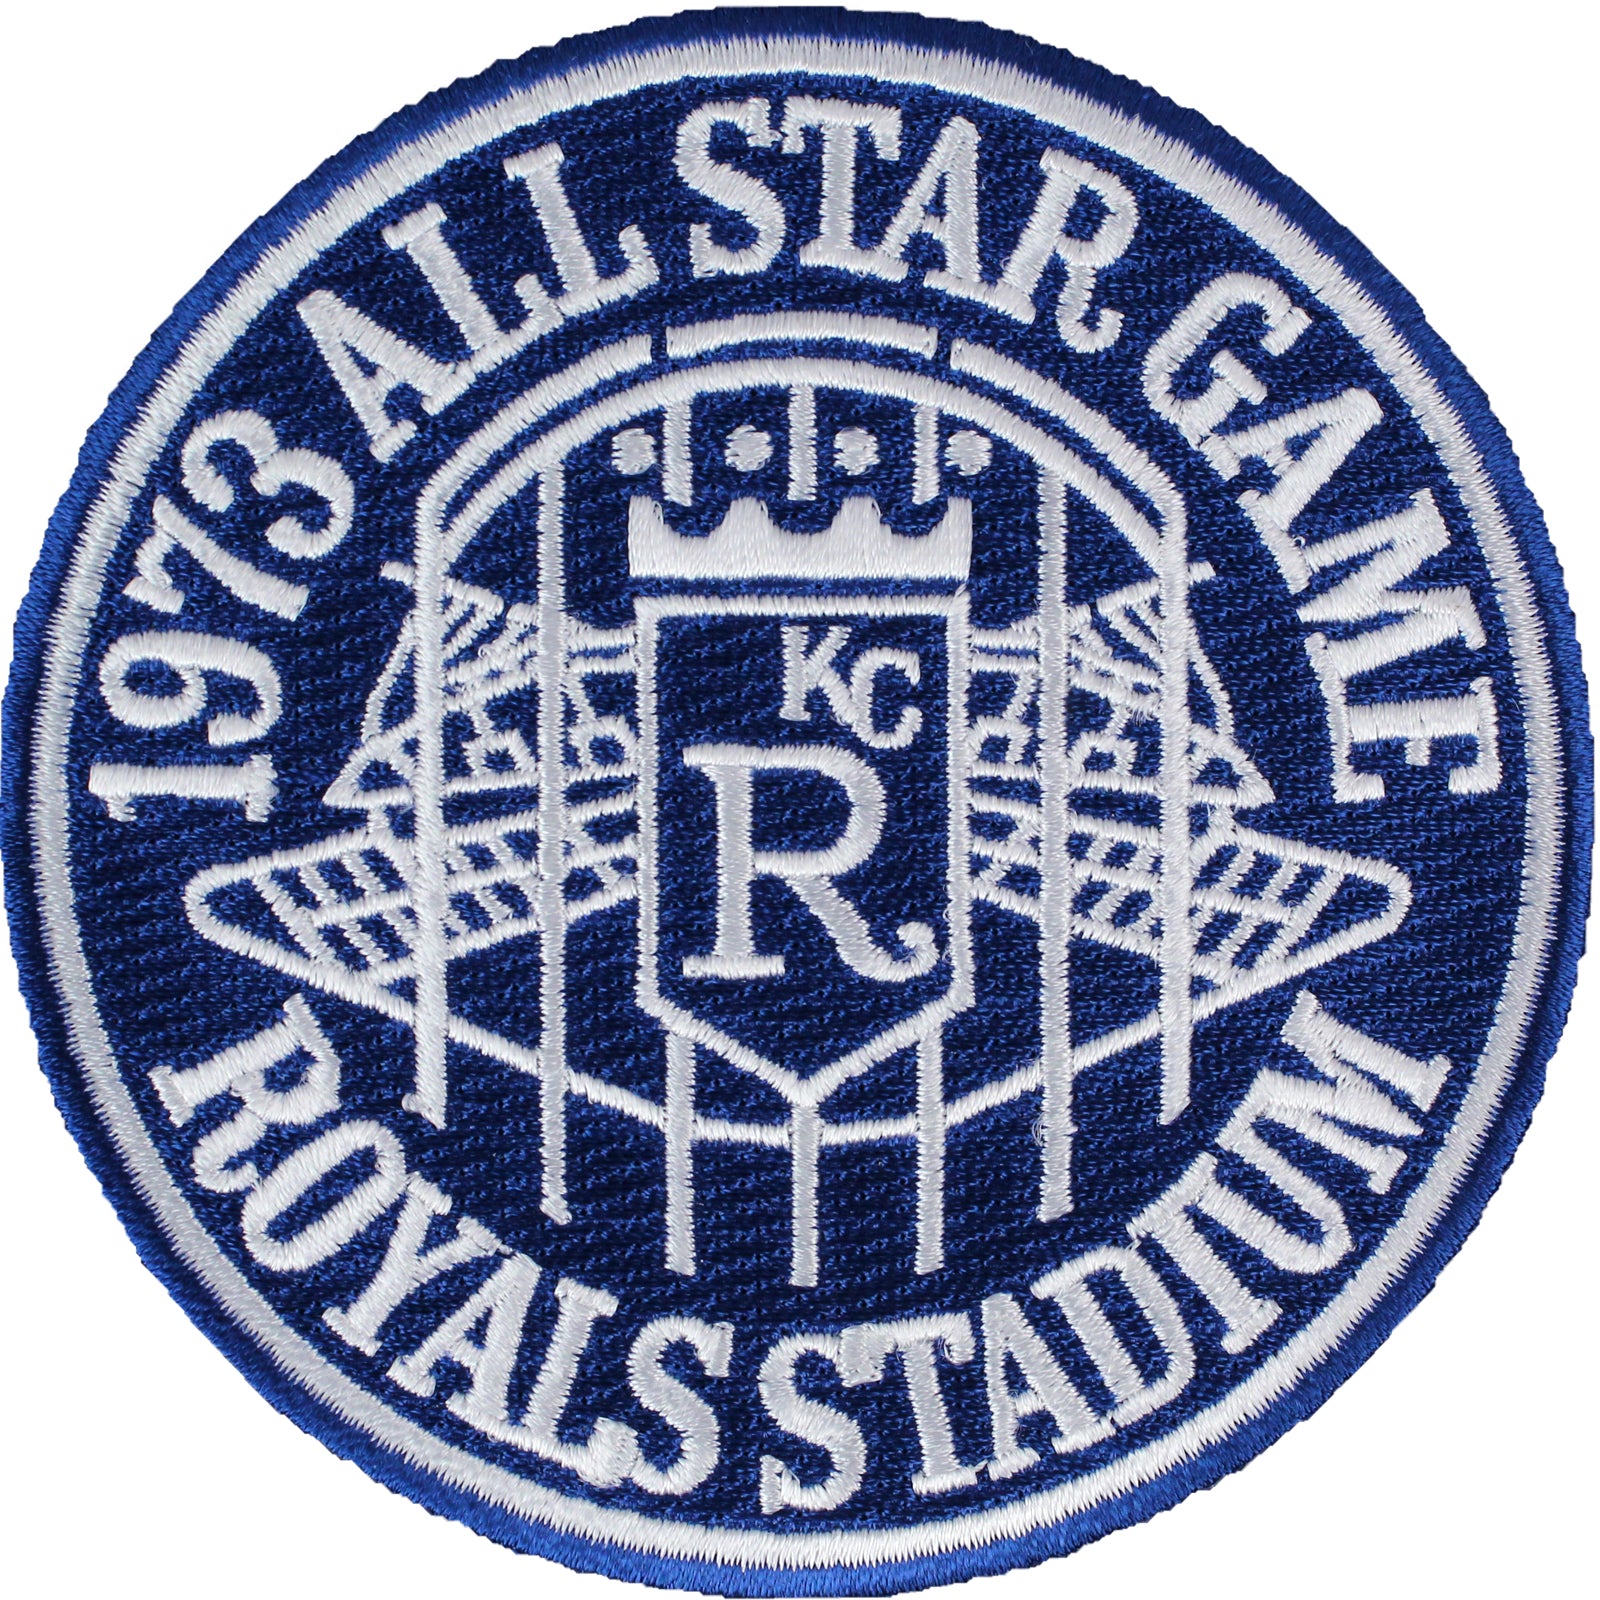 1973 MLB All Star Game Patch Kansas City Royals Stadium Jersey Patch 